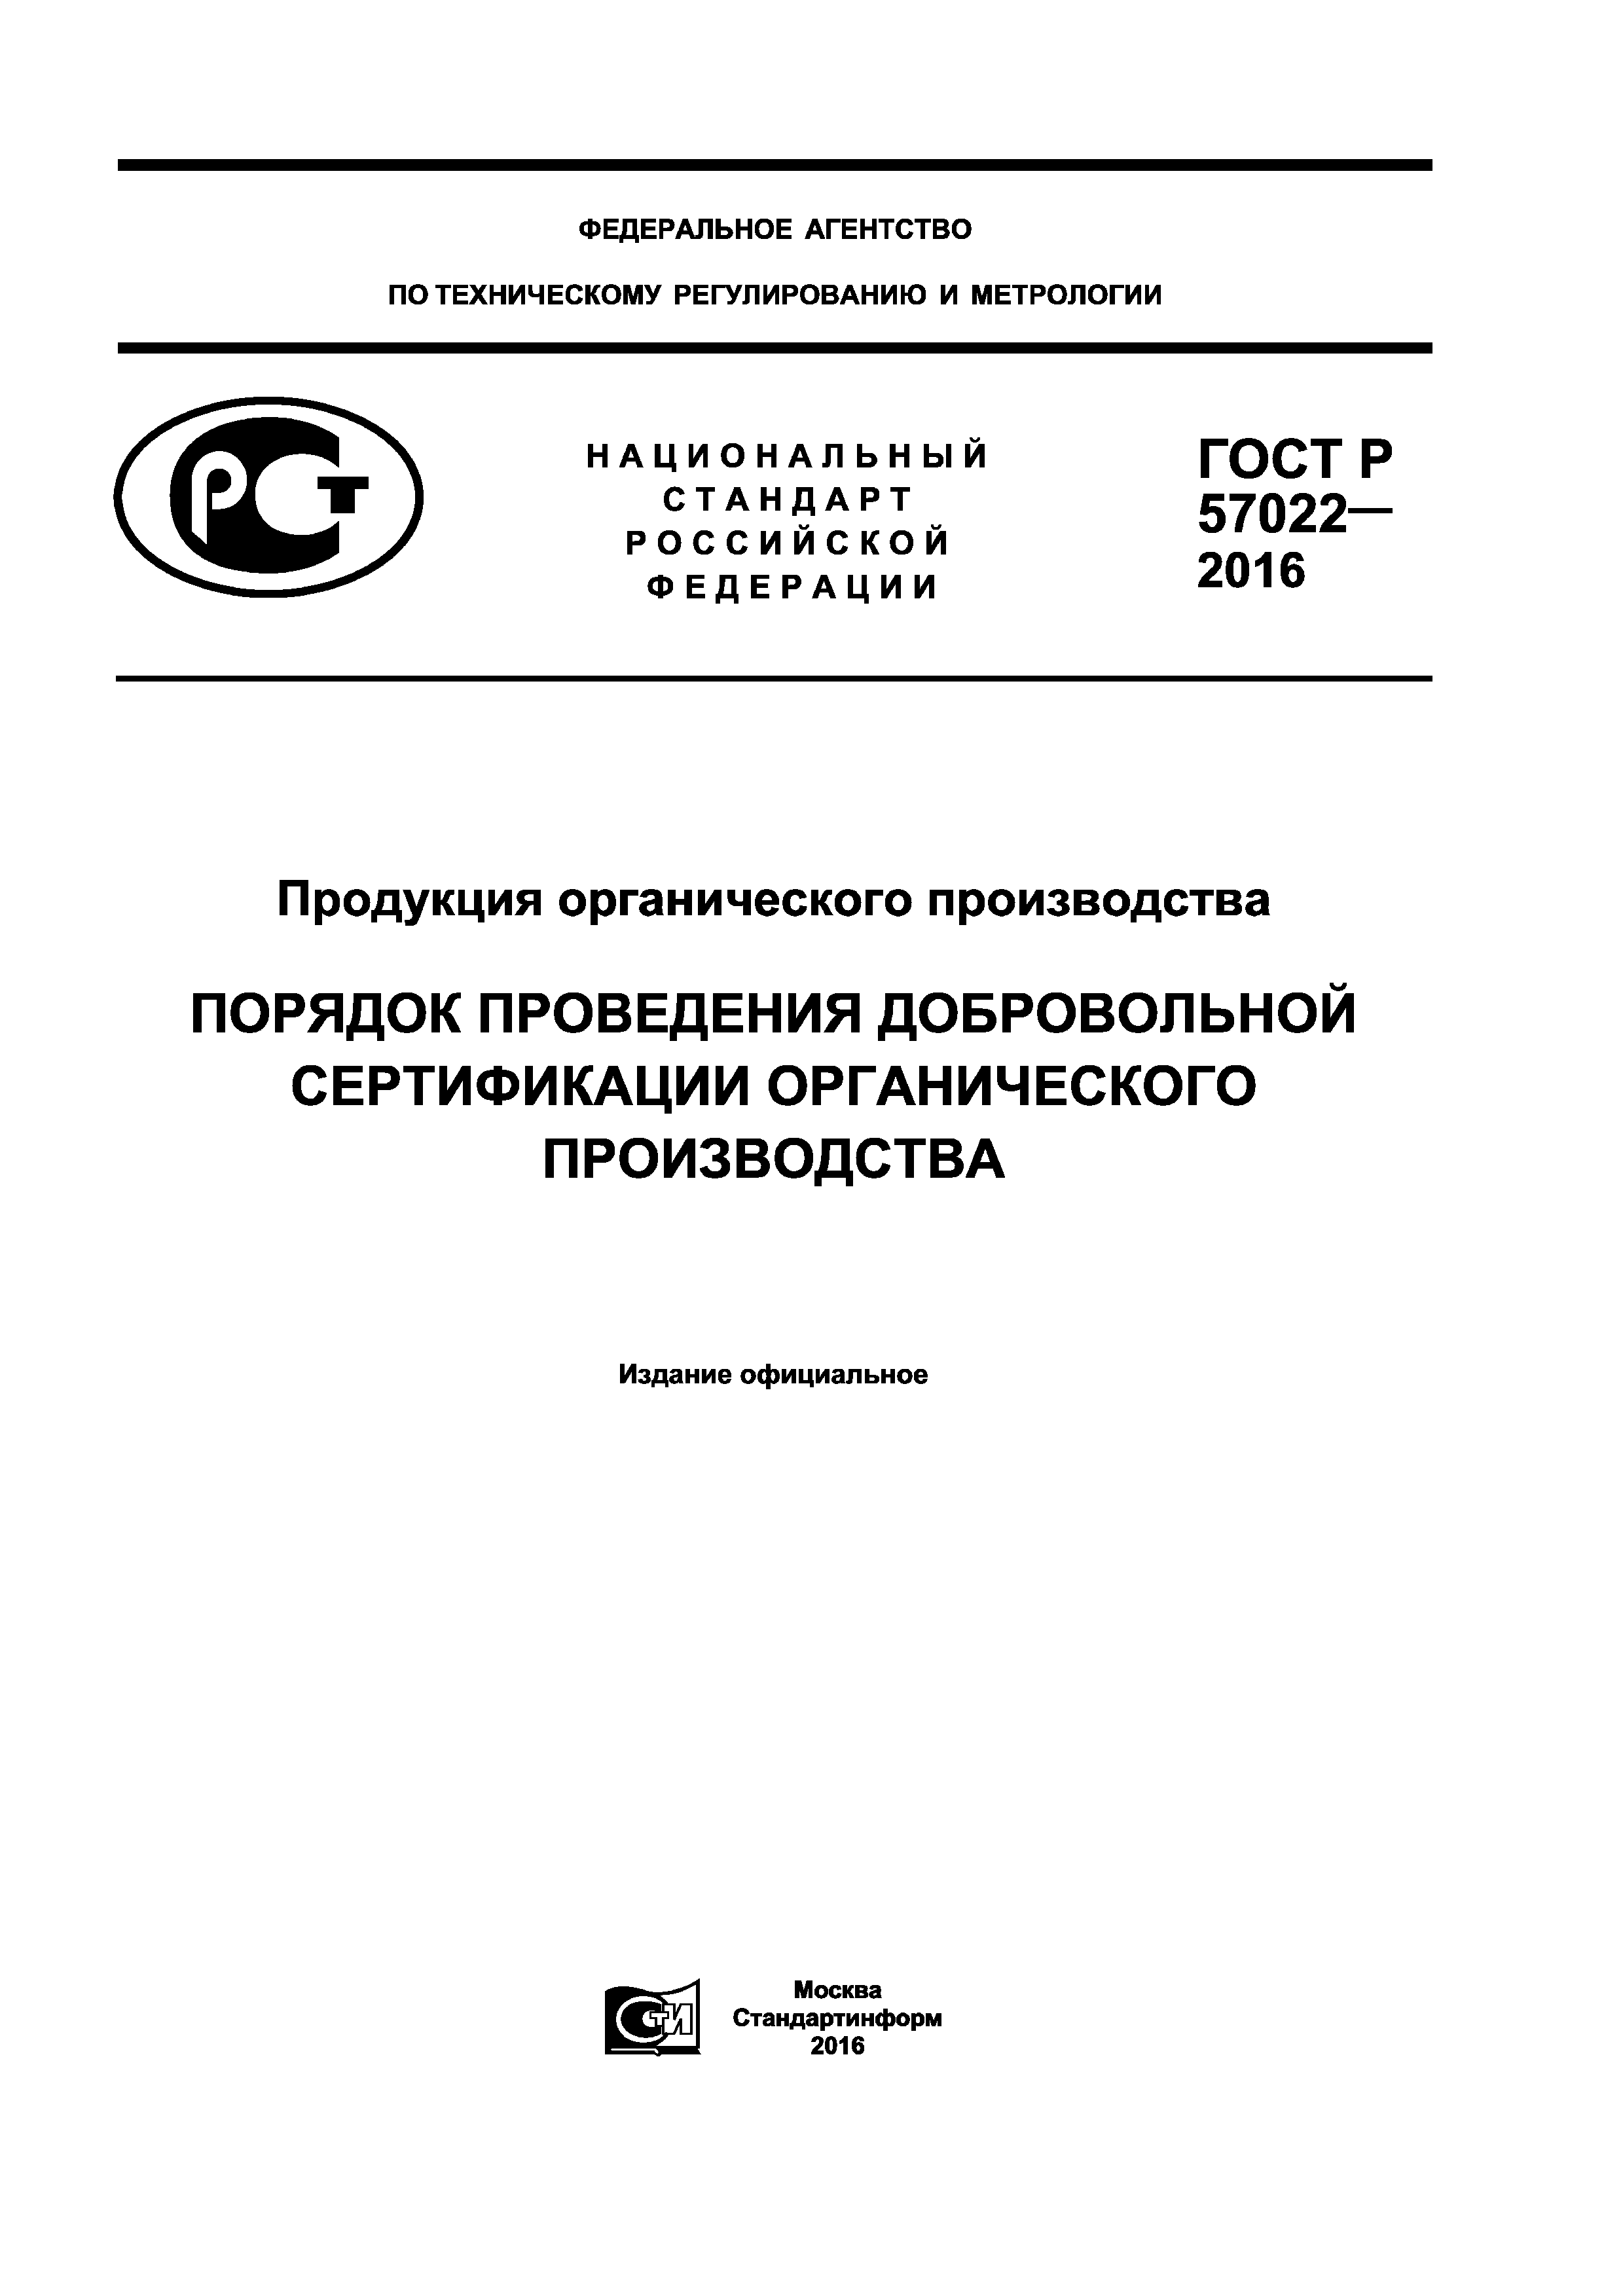 ГОСТ Р 57022-2016